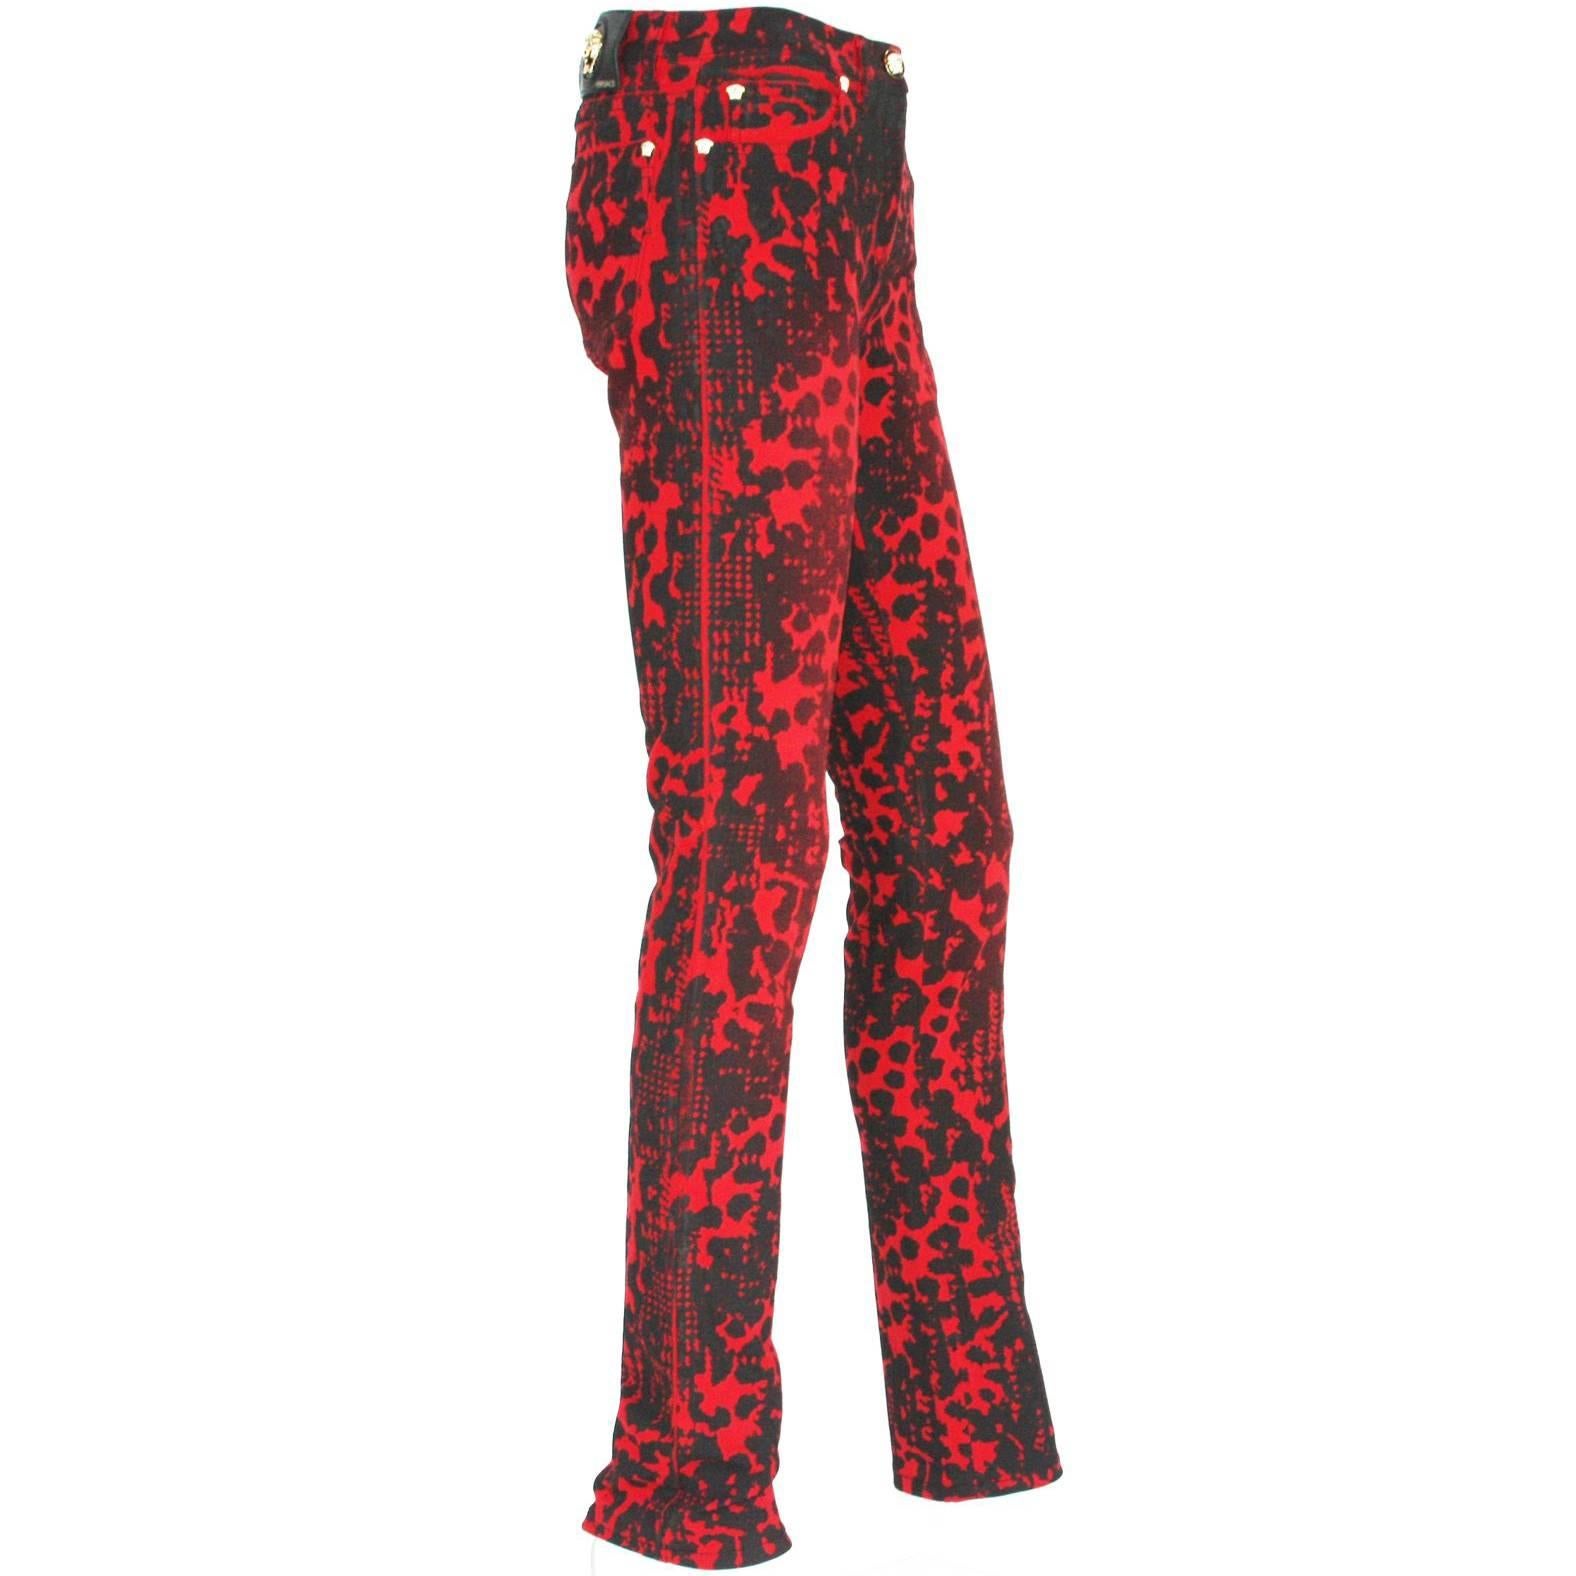 New $795 Versace Red Black Medusa Leopard Graphic Print Stretch Denim Jeans S, M